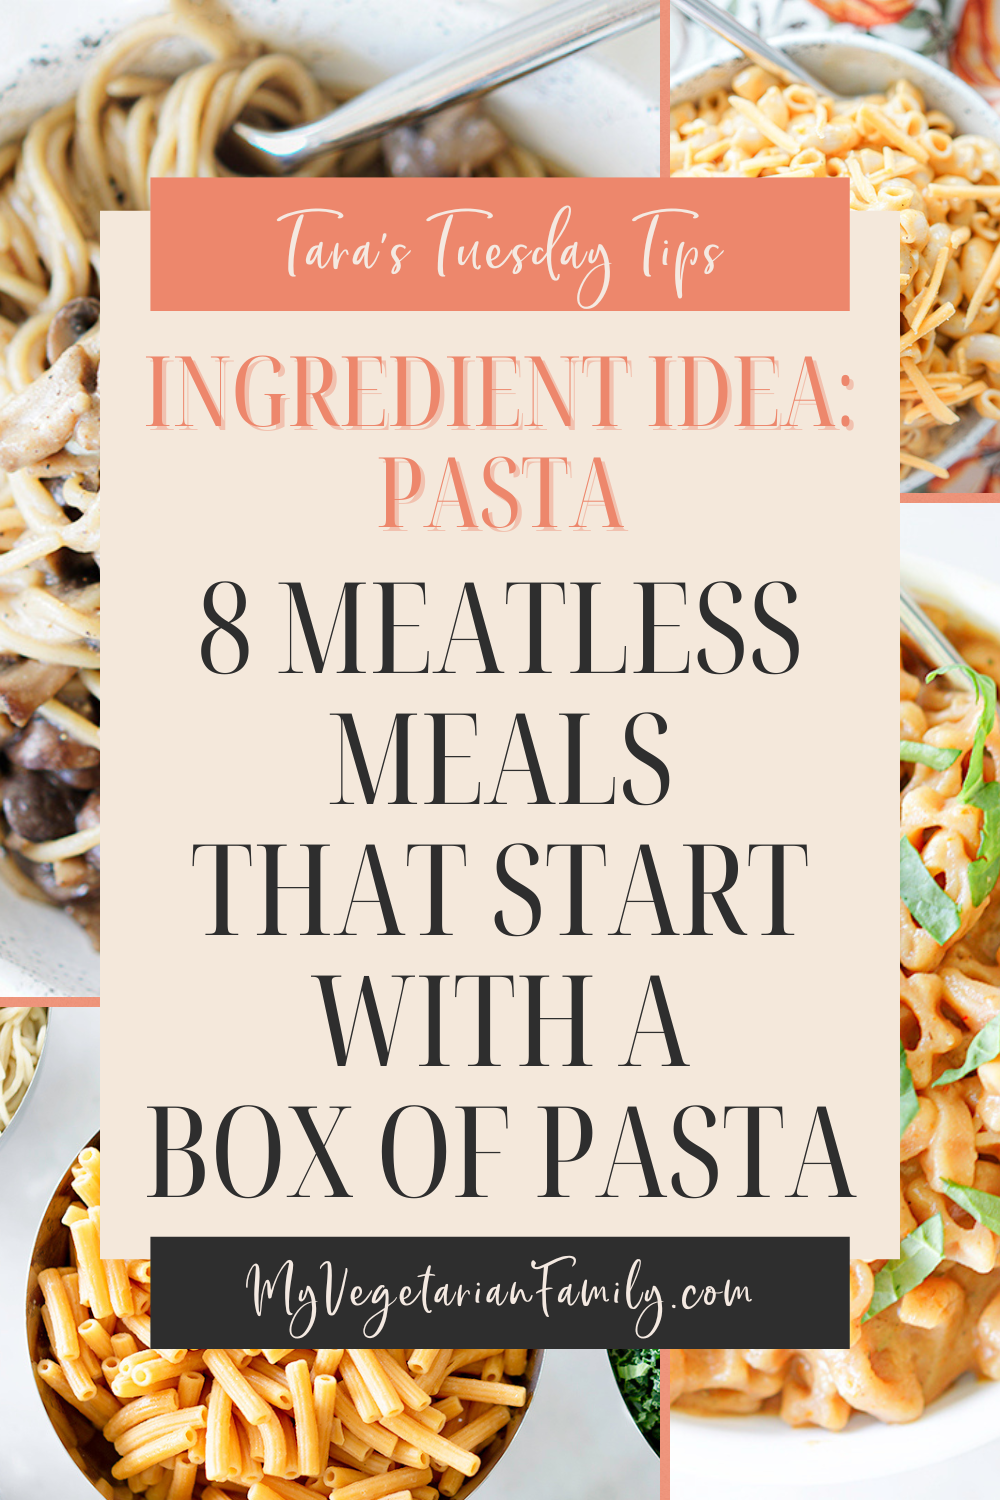 8 Meatless Meals That Start with a Box of Pasta | Tara's Tuesday Tips | My Vegetarian Family #ingredientidea #tarastuesdaytips #meatlesspastarecipes